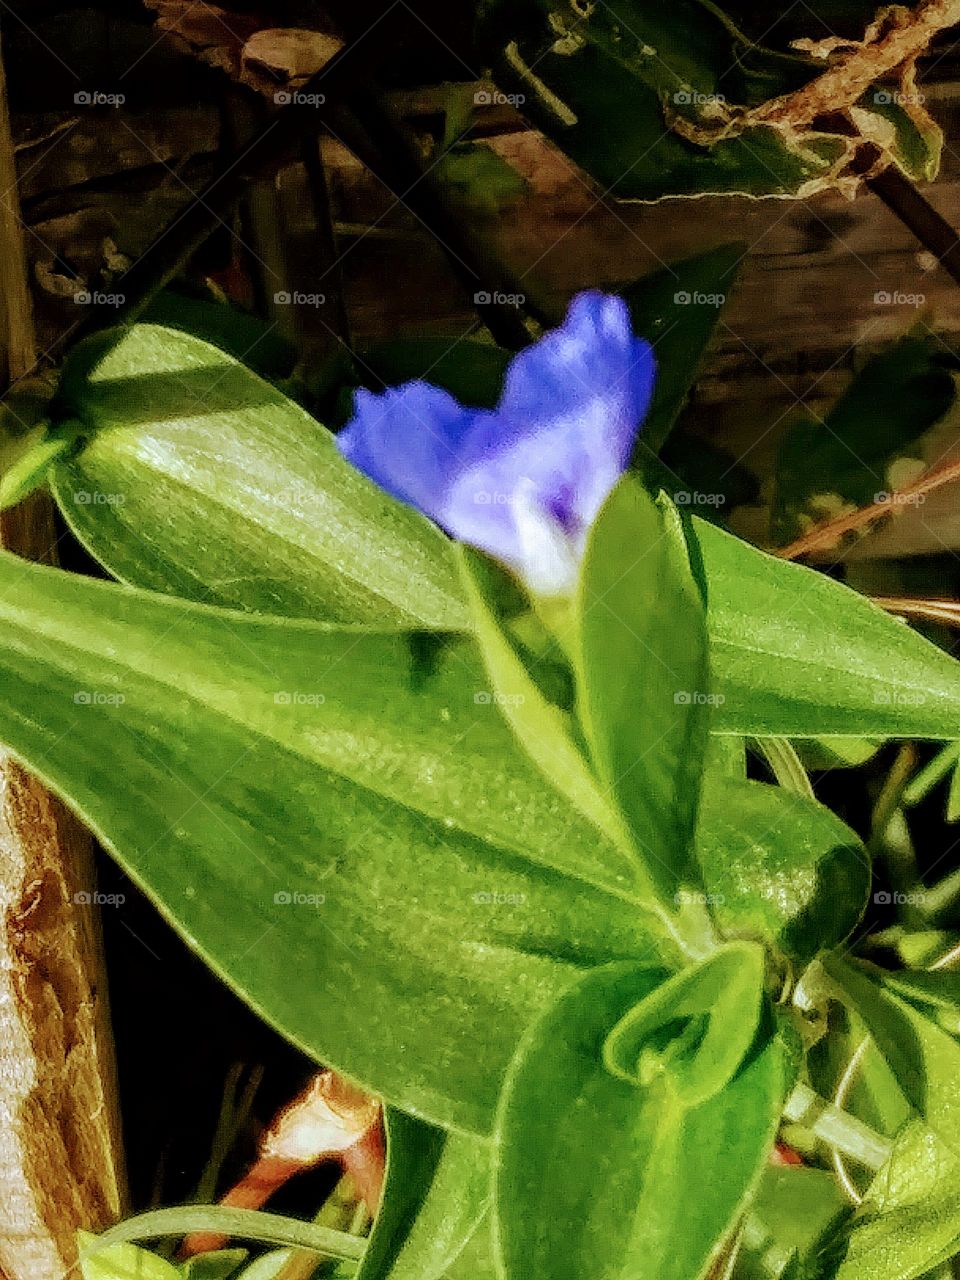 tiny blue flower